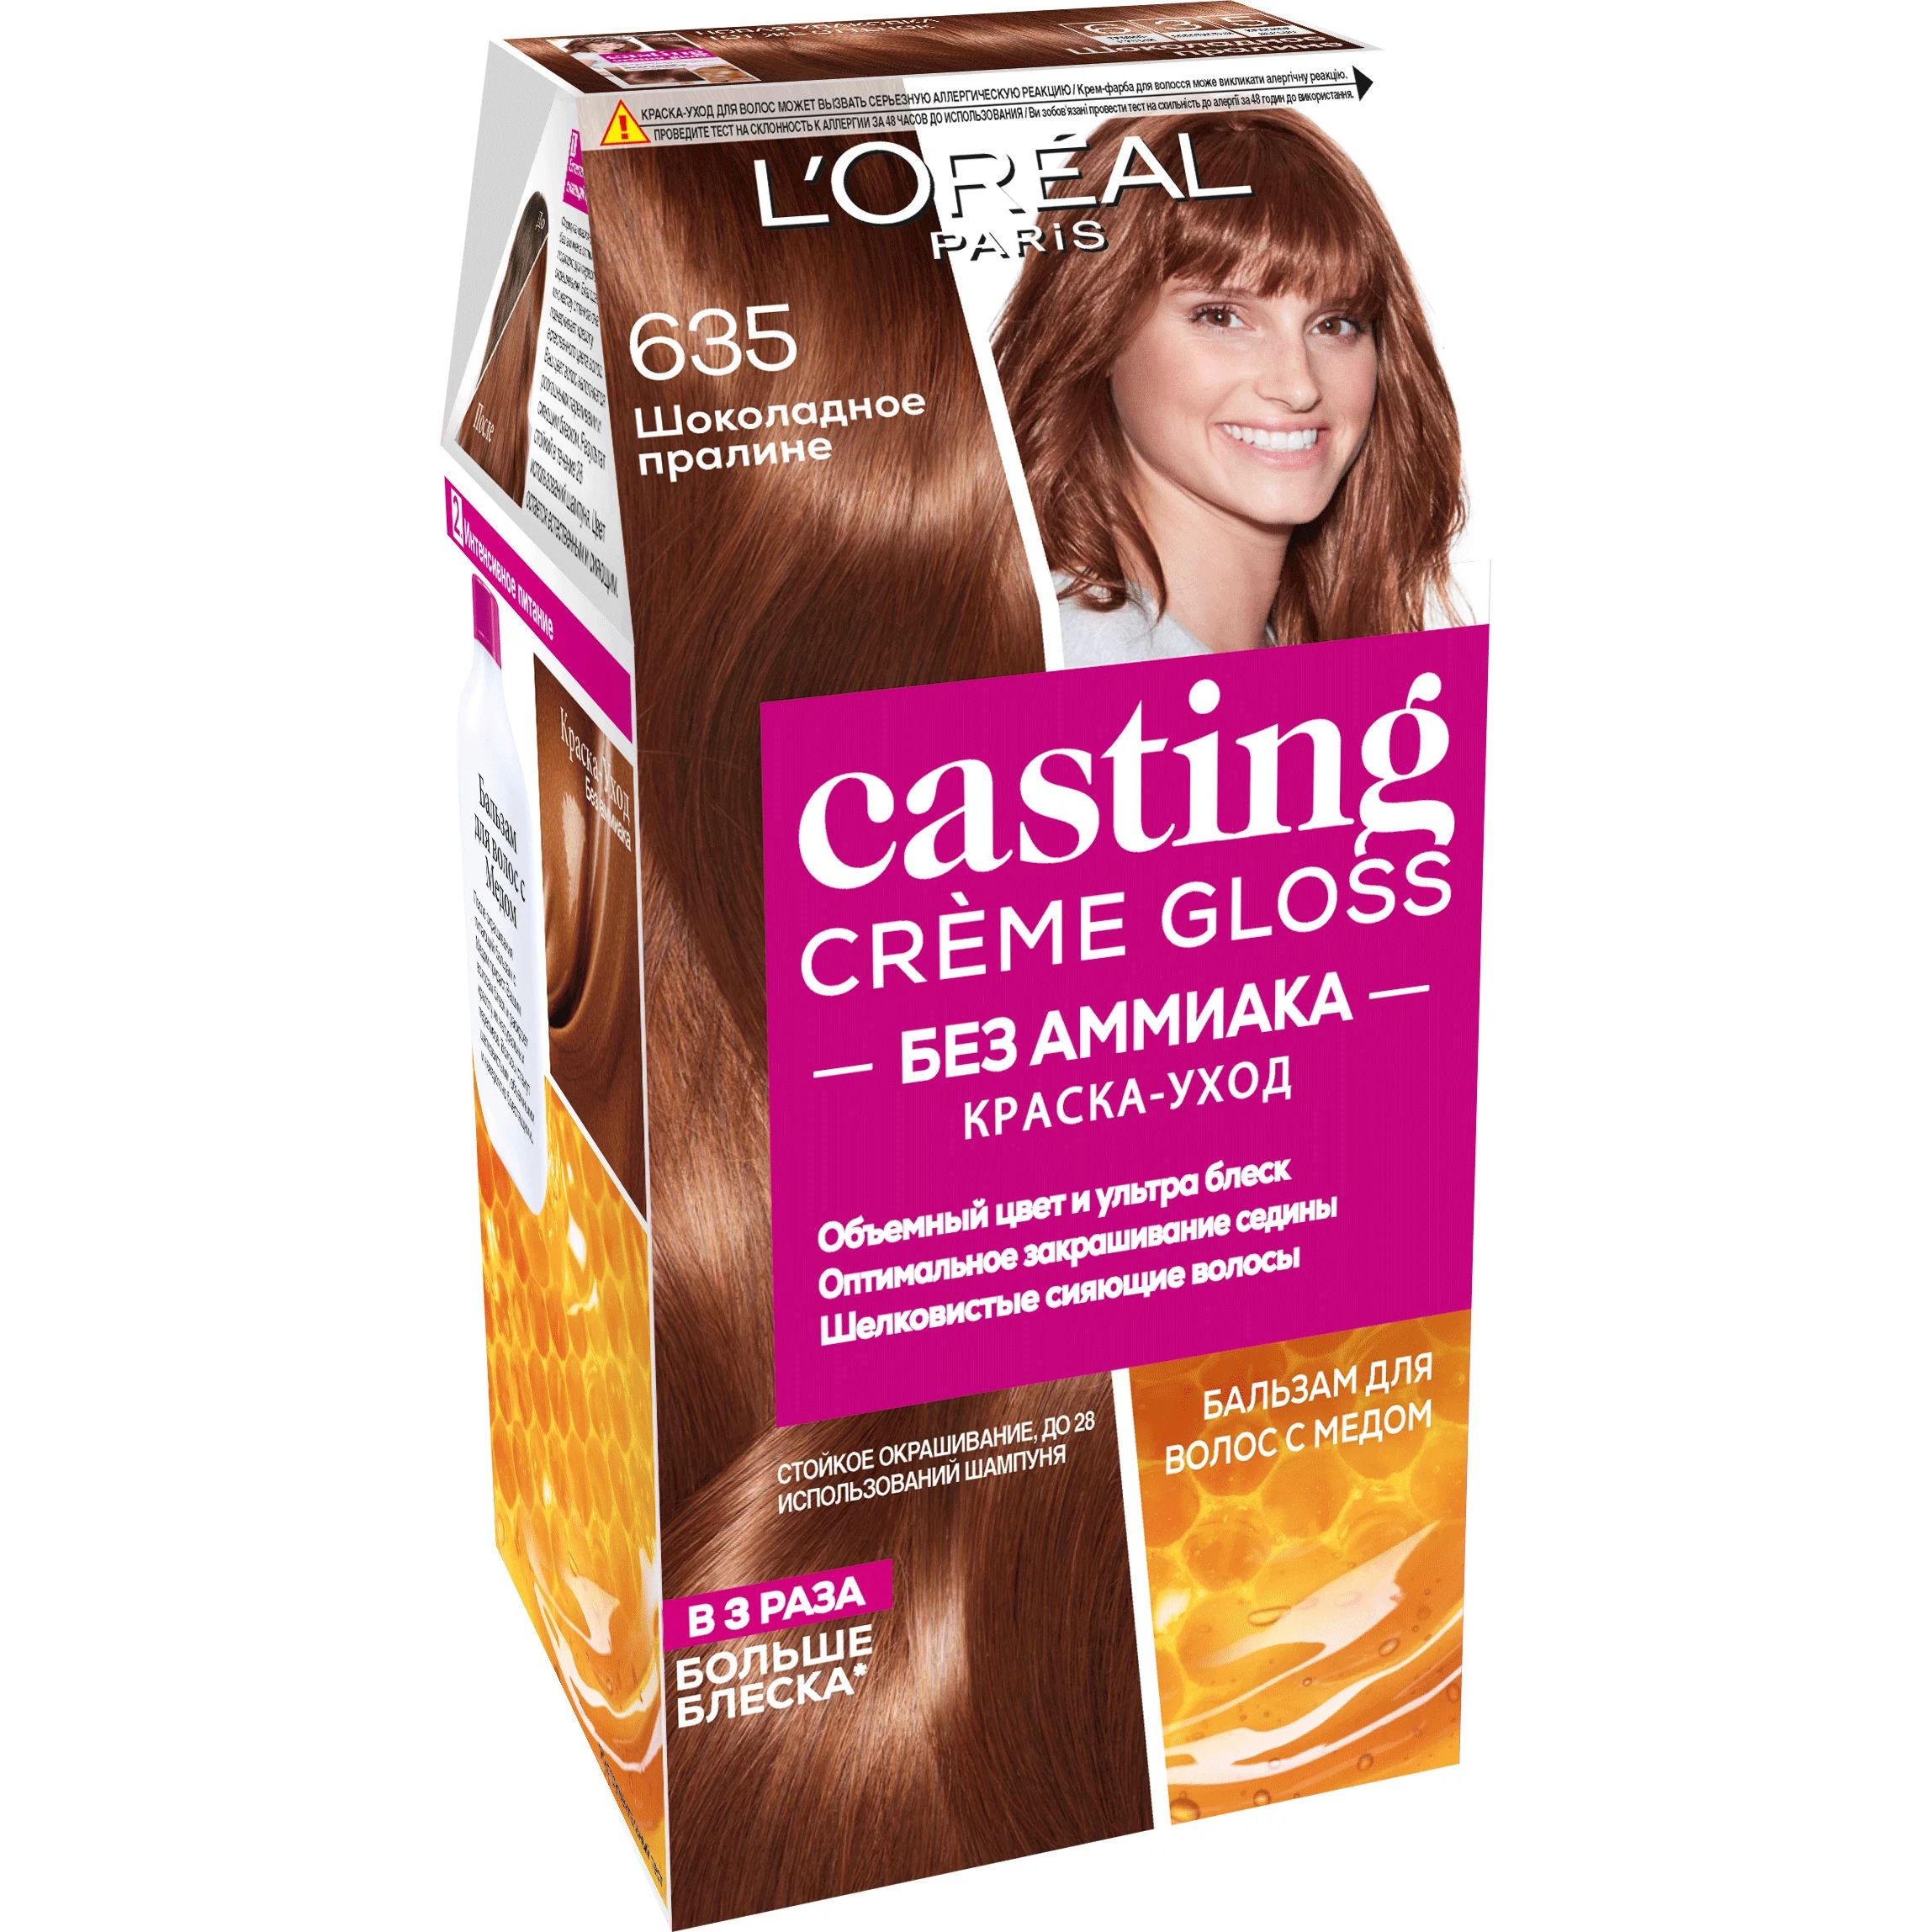 Краска-уход для волос L'Oreal Paris Casting Creme Gloss шоколадное пралине, №635, 239 мл